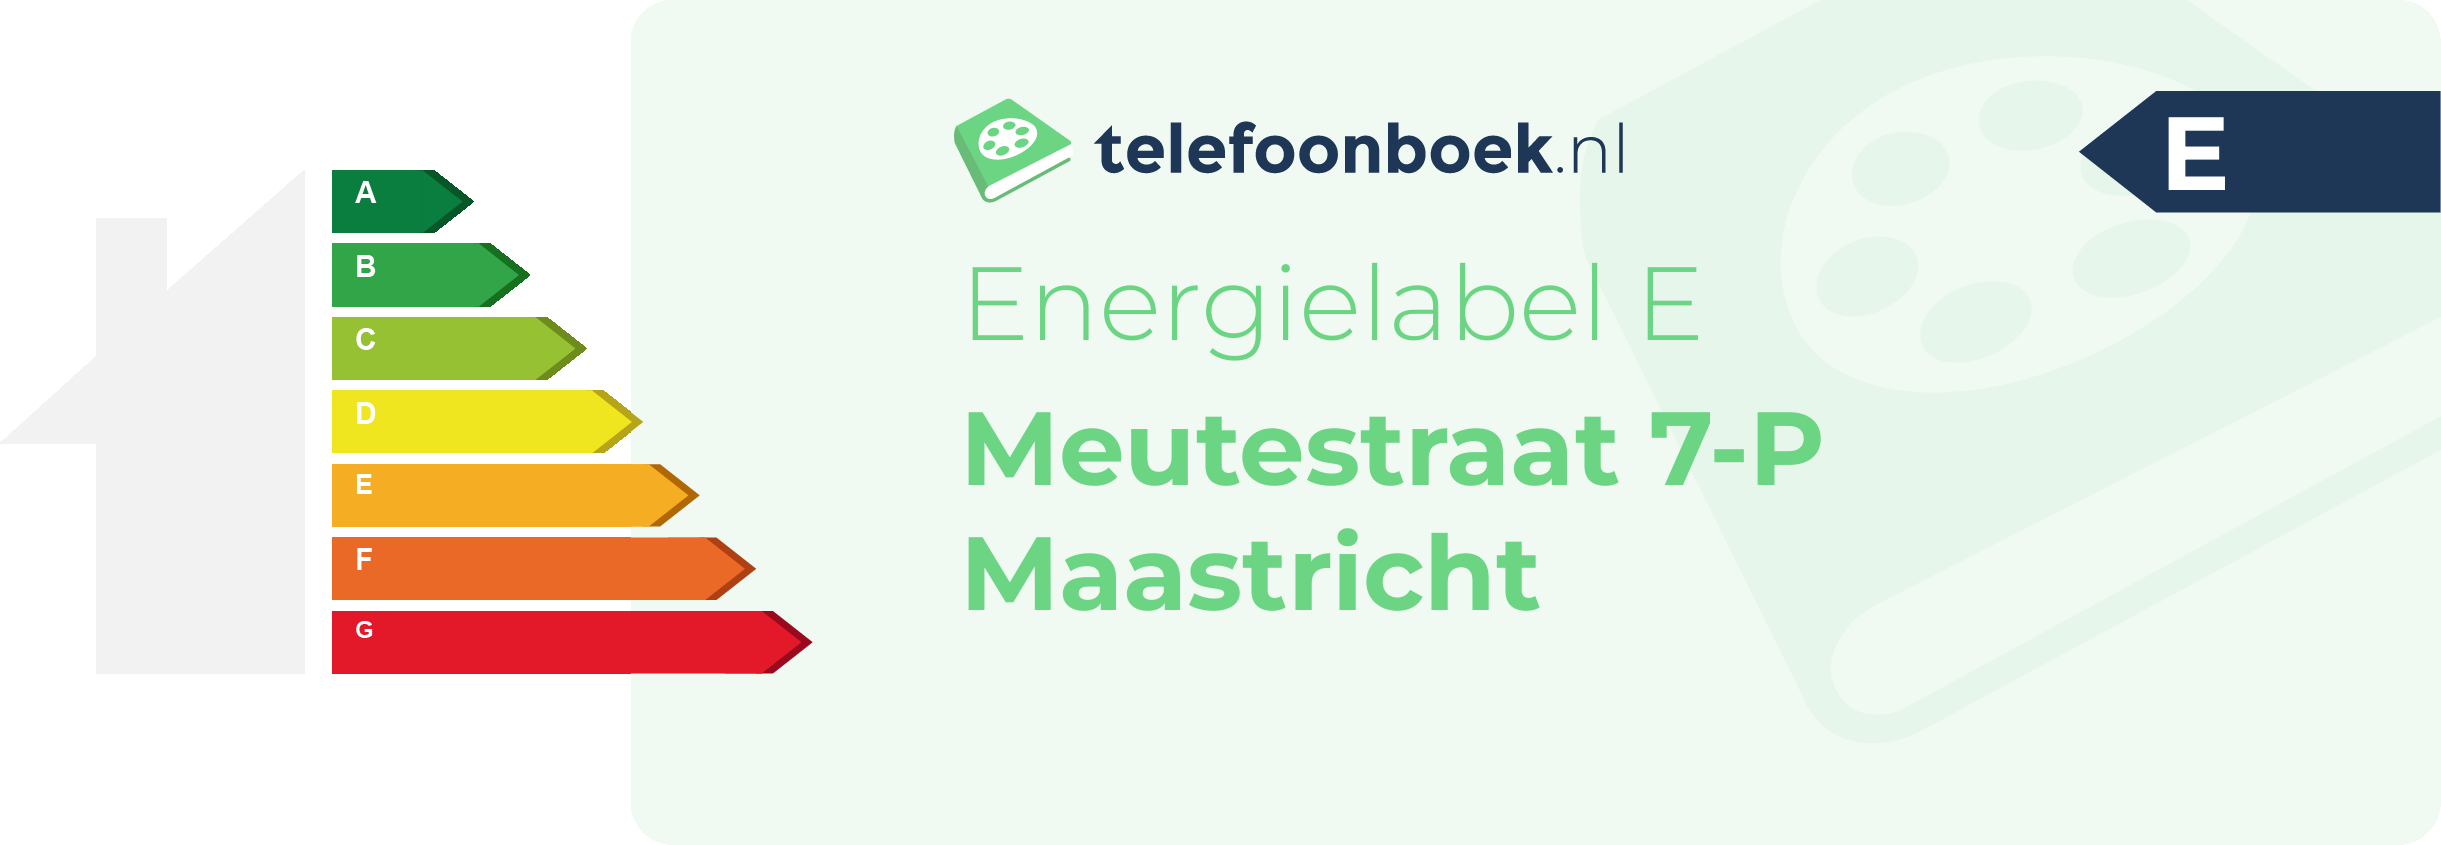 Energielabel Meutestraat 7-P Maastricht